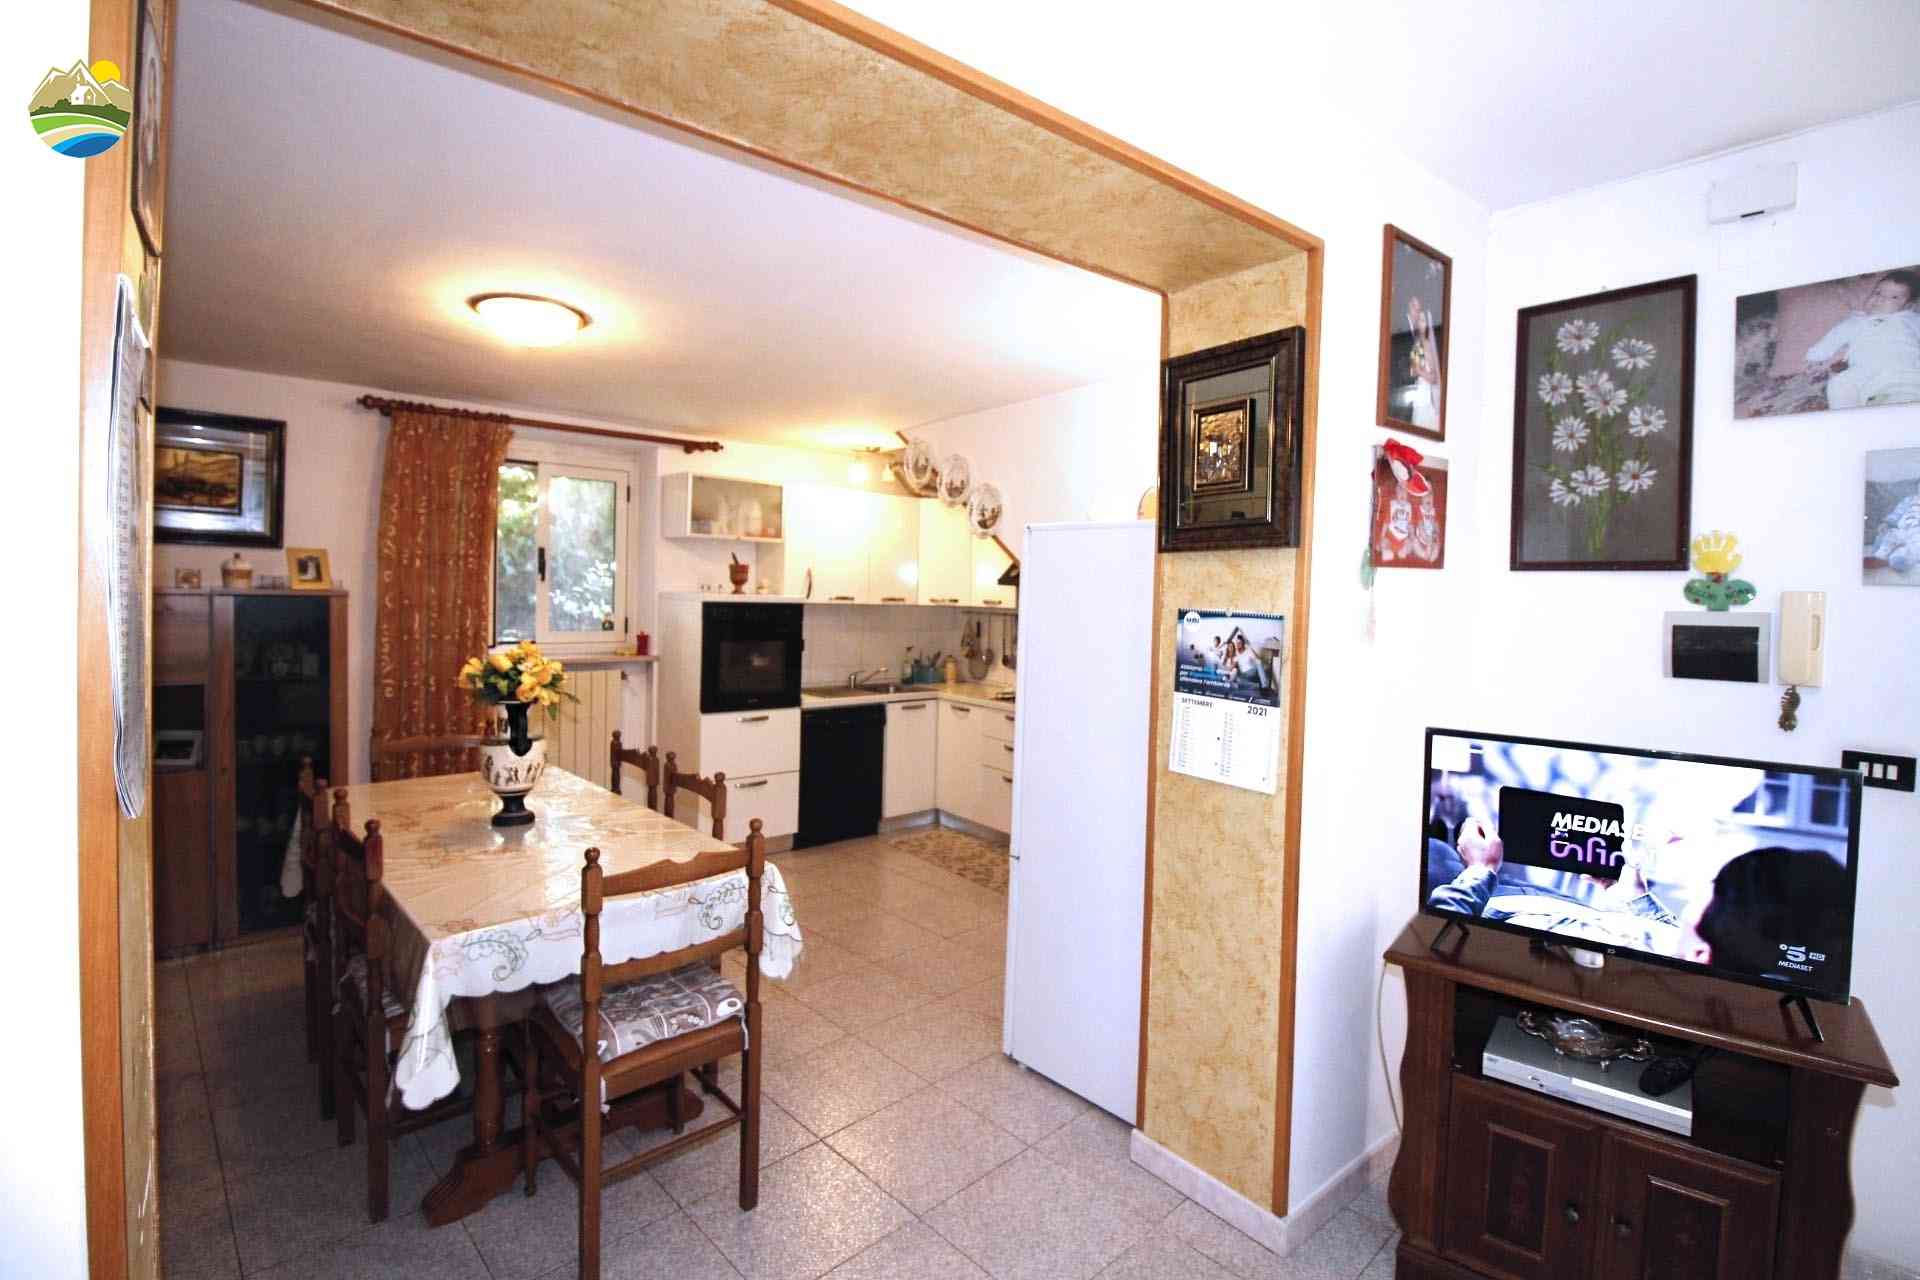 Casa in paese Casa in paese in vendita Montefino (TE), Casa Peperone - Montefino - EUR 58.632 570